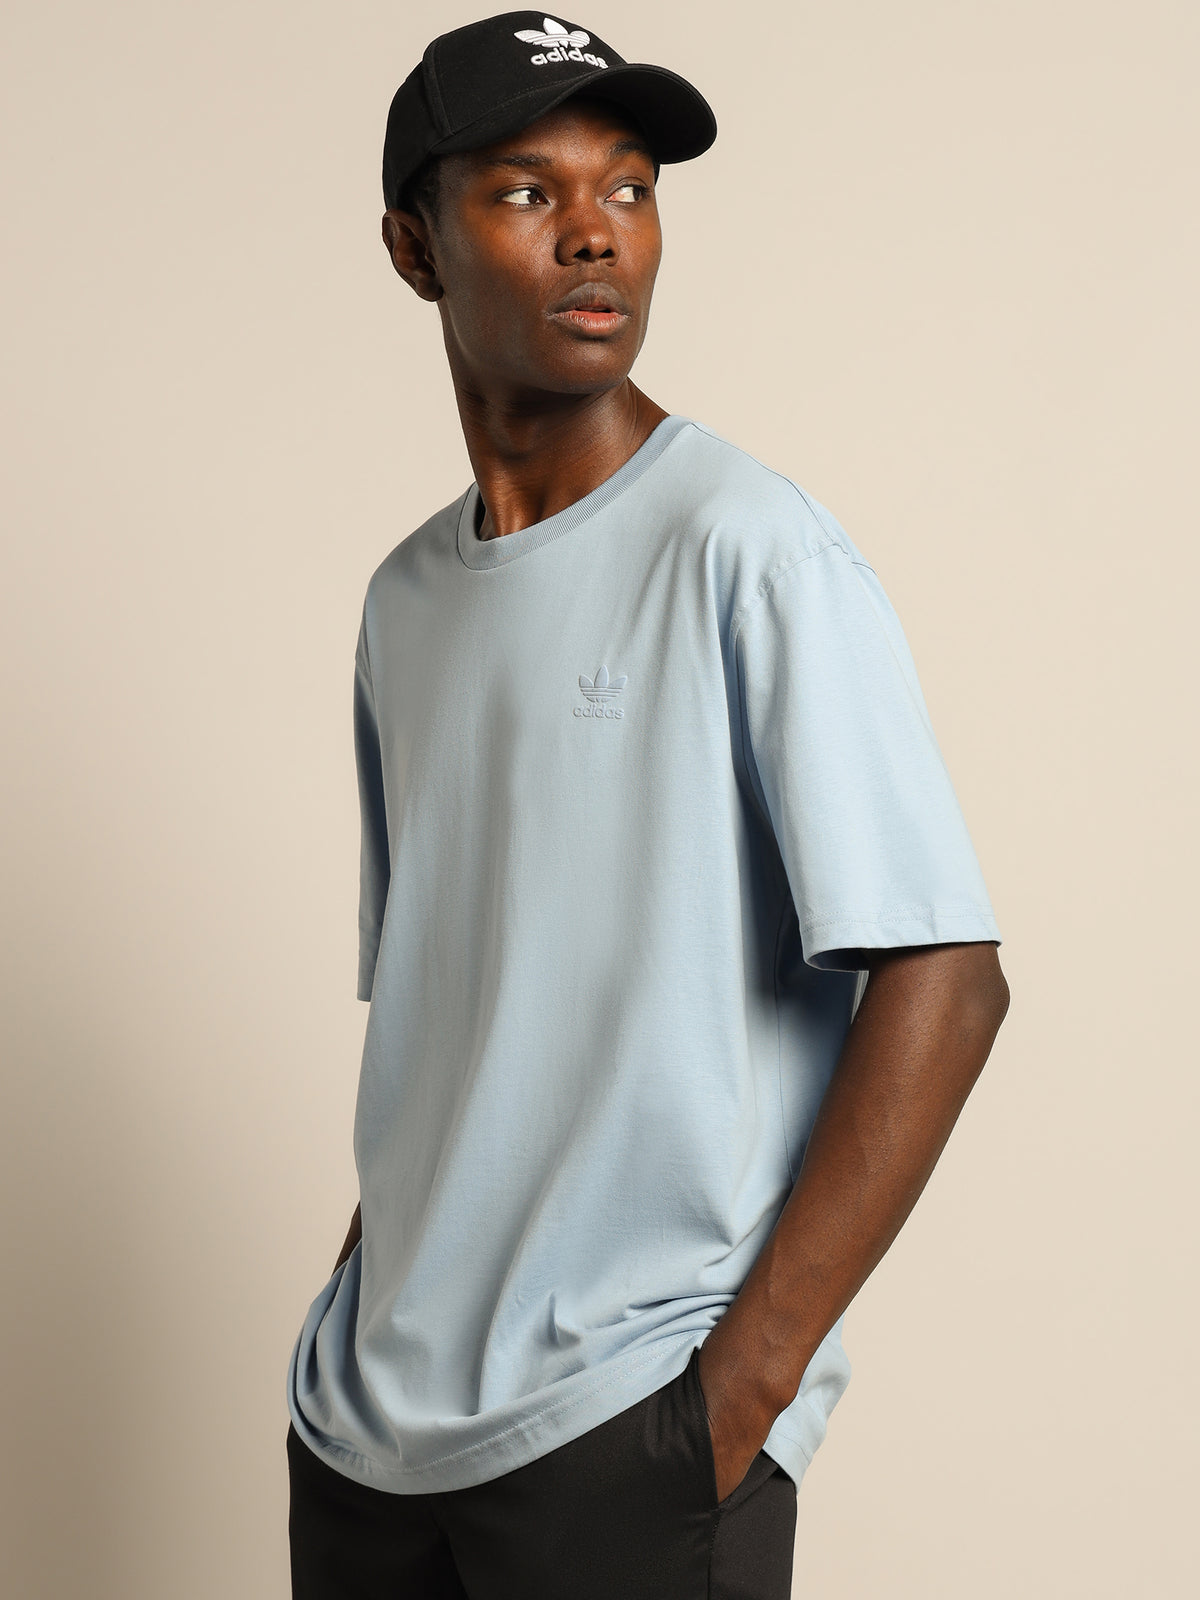 Adicolor Classics Trefoil T-Shirt in Ambient Sky Blue